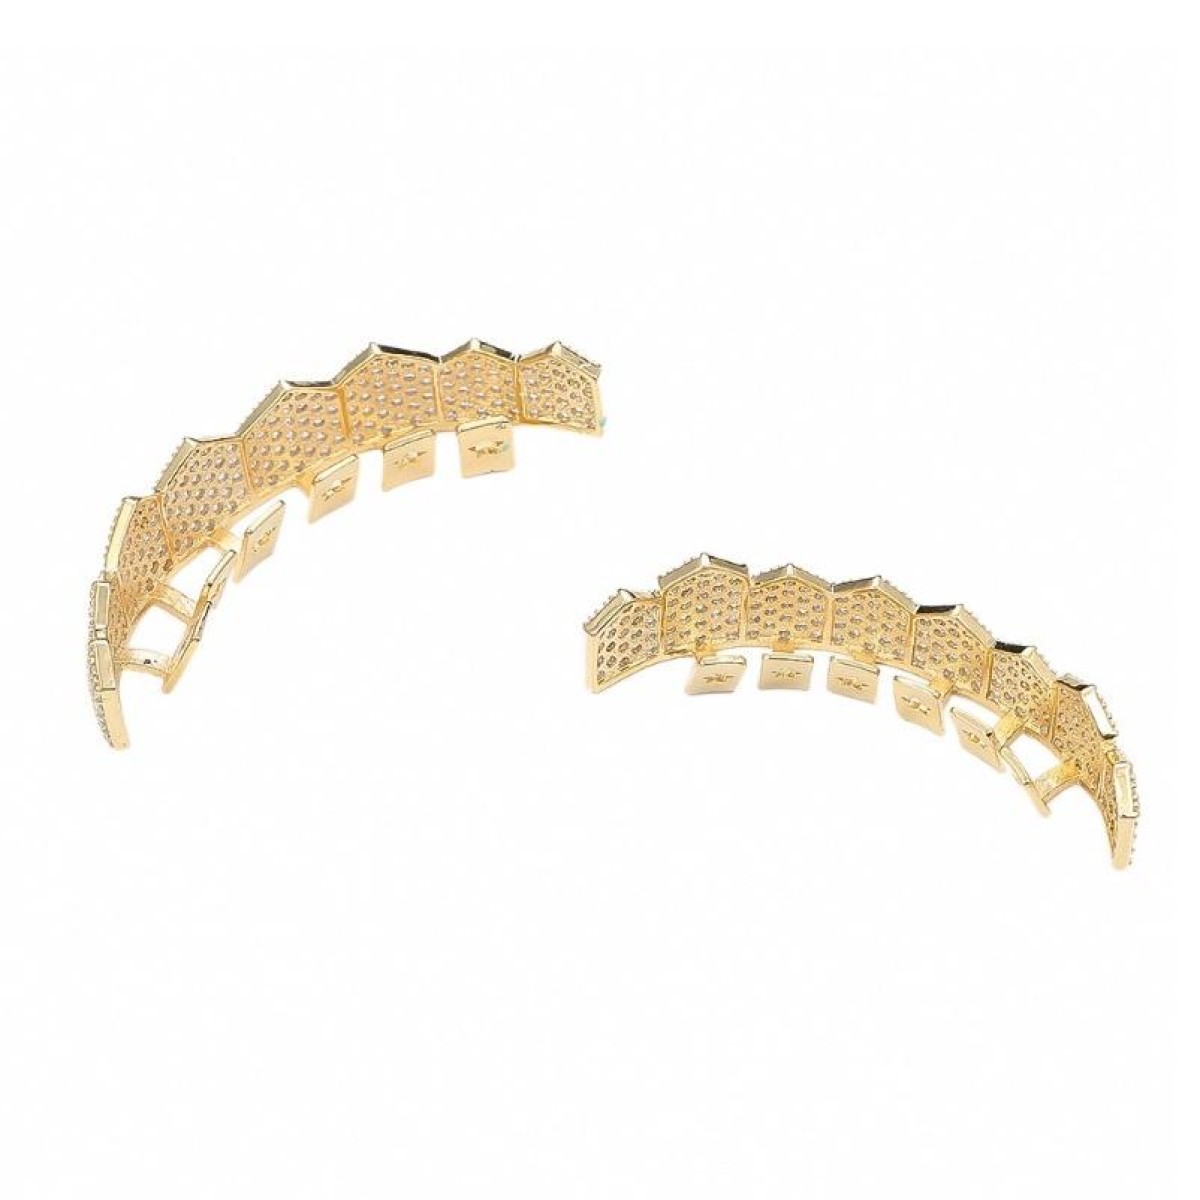 8 Teeth Square Zirconium Gold Teeth Hip Hop Braces, Colour: Gold Lower Teeth